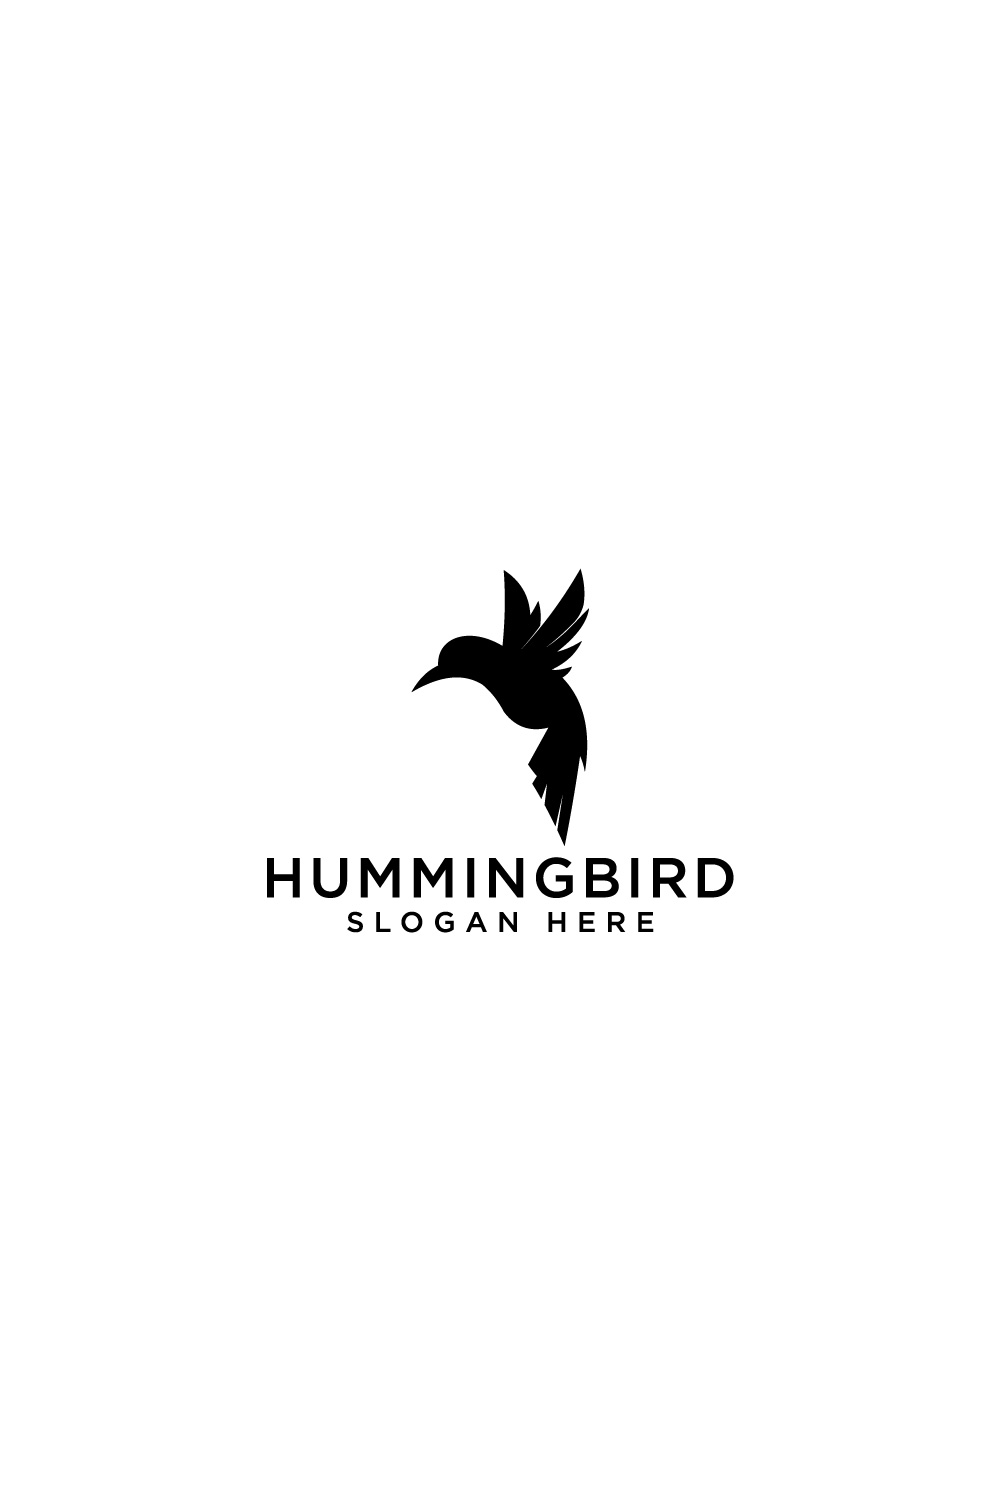 hummingbird logo vector animal silhouette pinterest preview image.